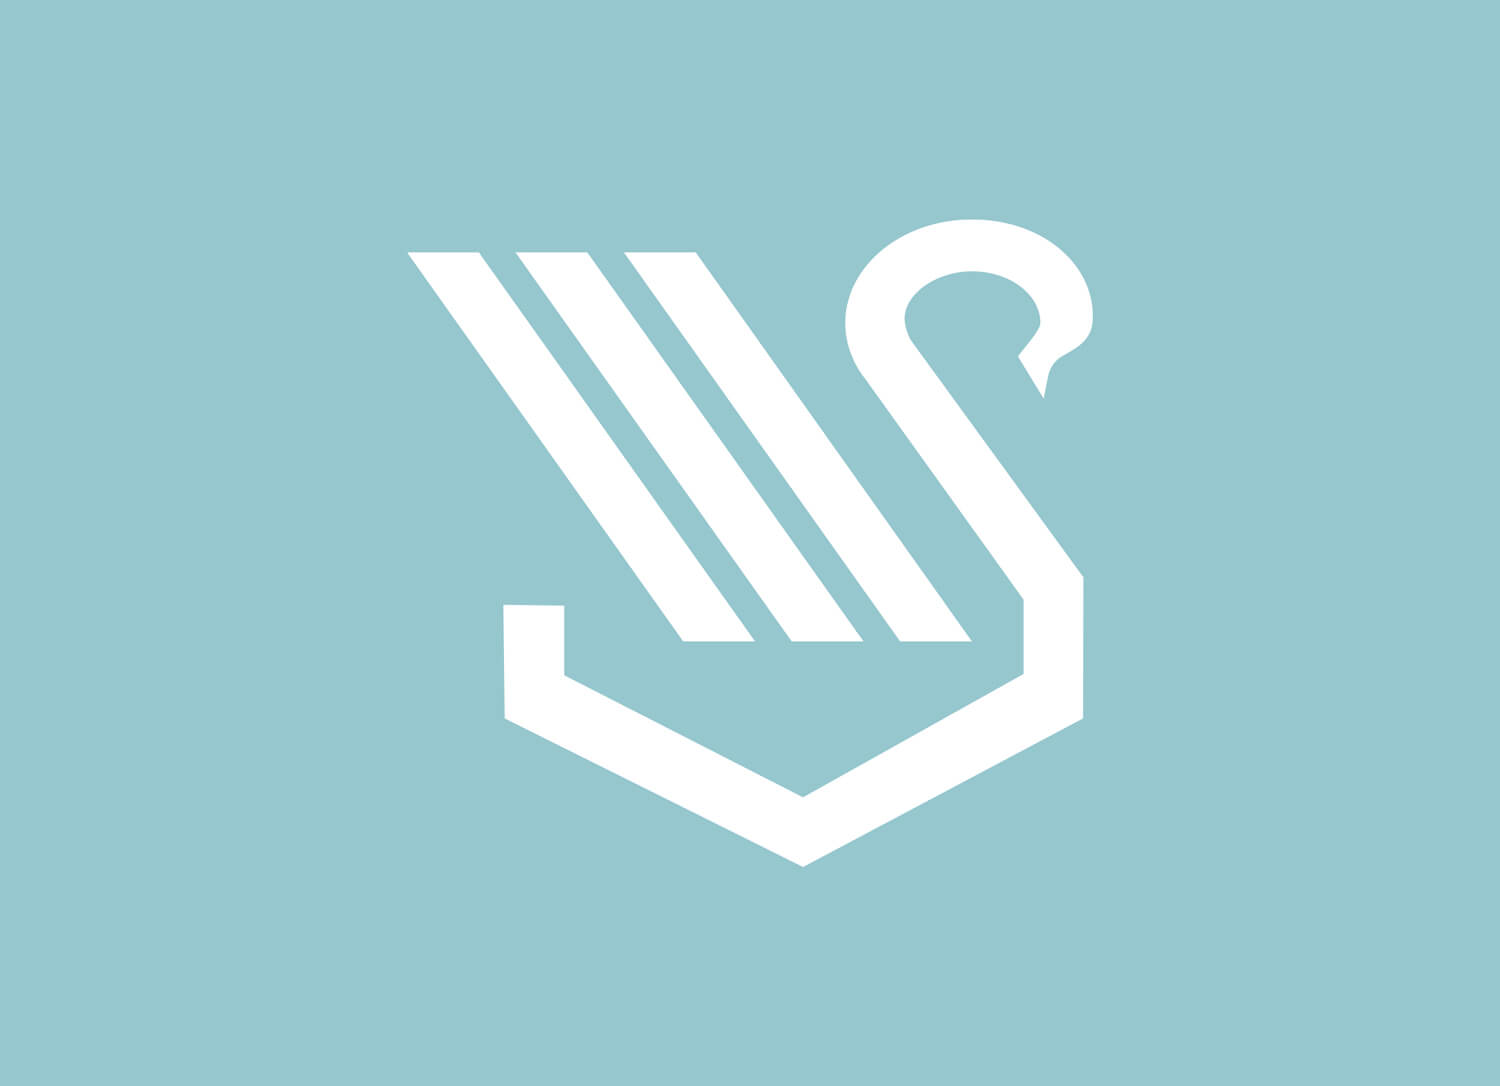 SH Logomark by Imaginary Friends